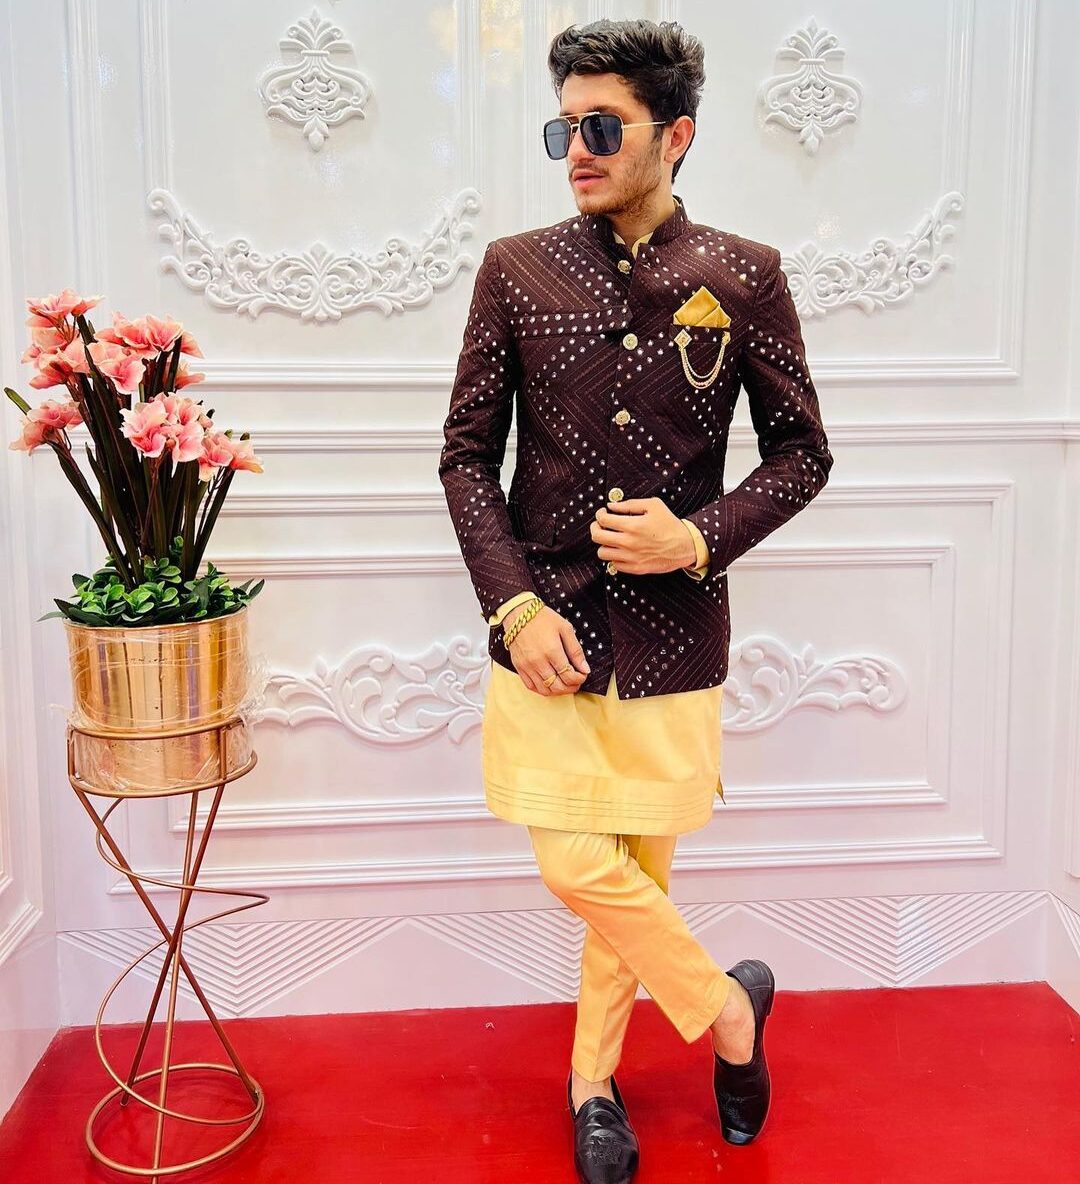 Buy KRAFT INDIA Men's Cotton Solid Yellow Kurta Churidar with Black Twill  Nehru Jacket Set at Amazon.in